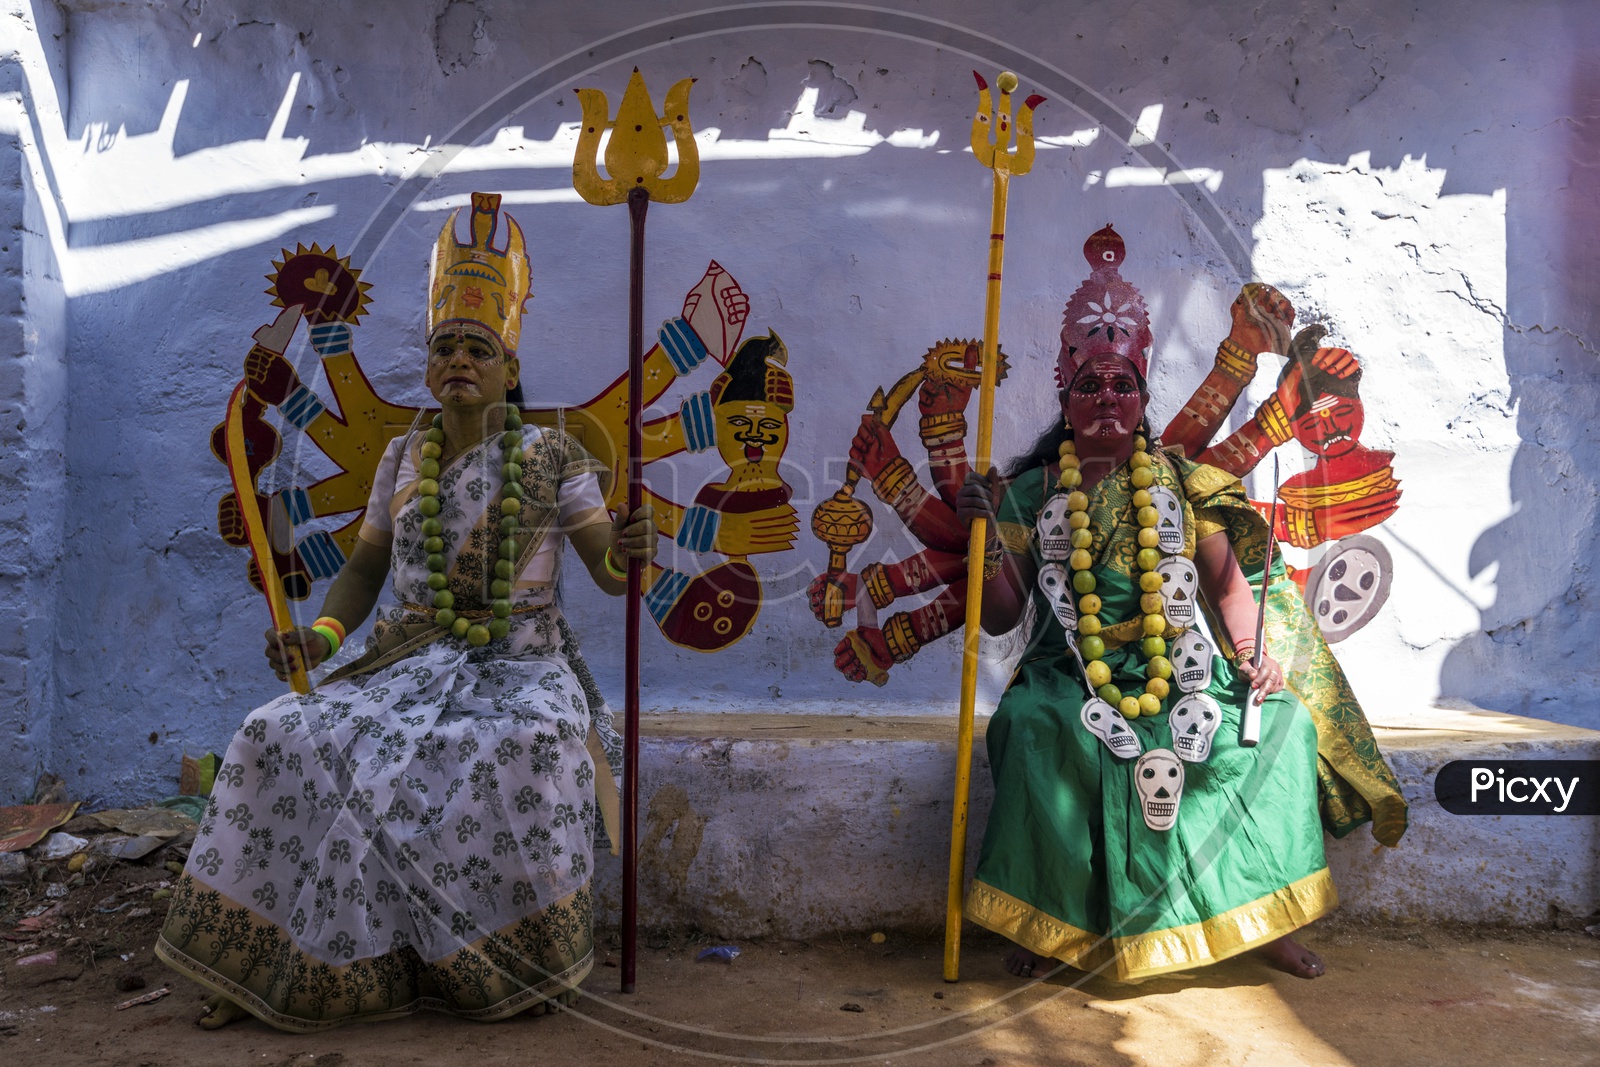 People dressed up for the Festival of Kali Kaveripattinam